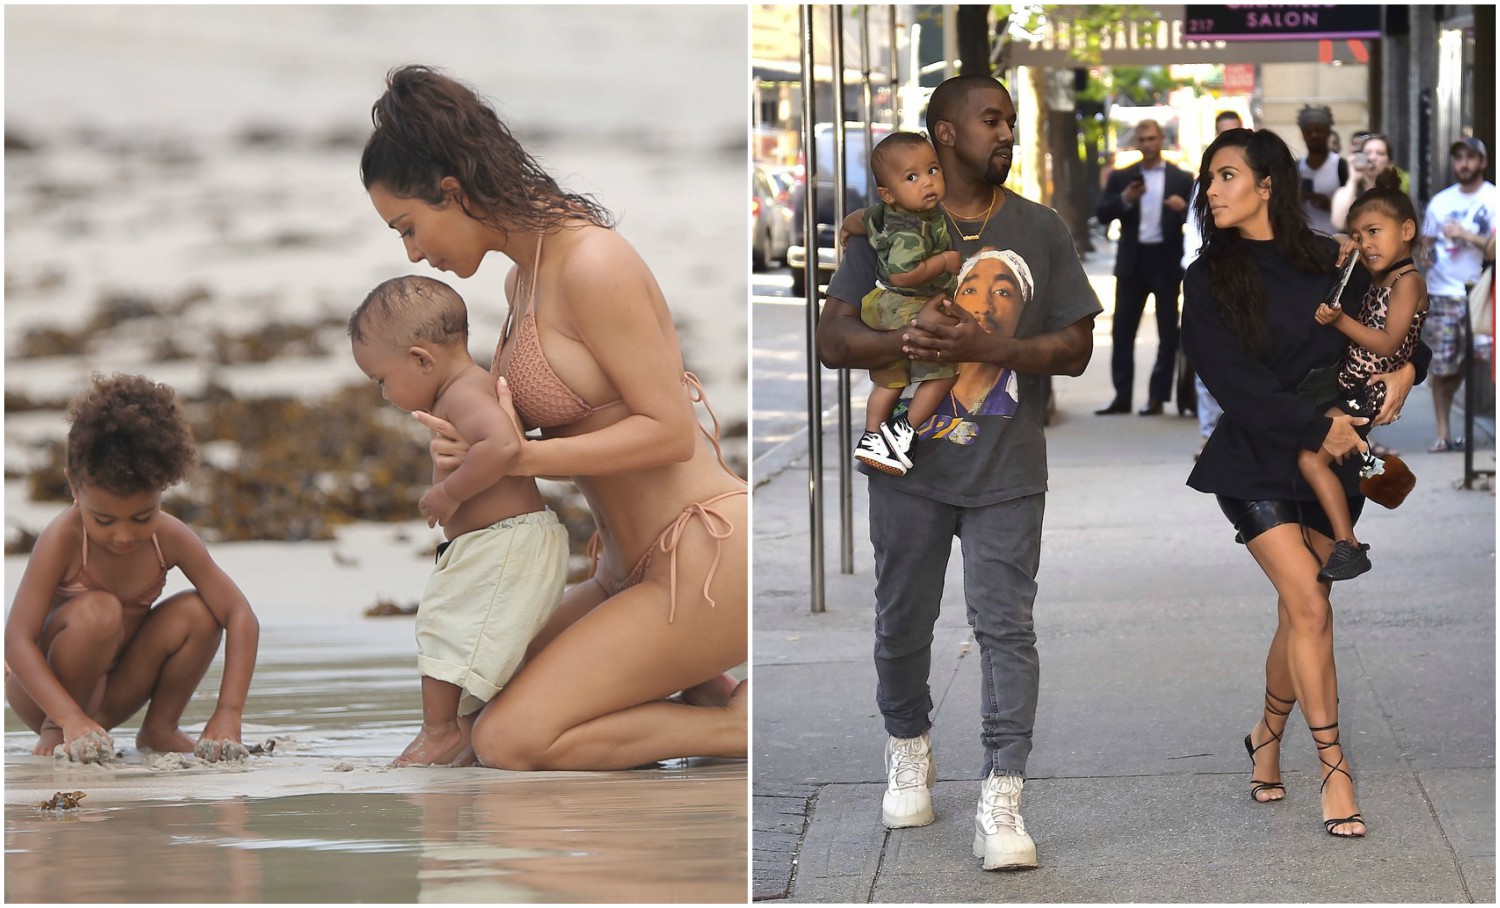 Kim Kardashian y sus hijos